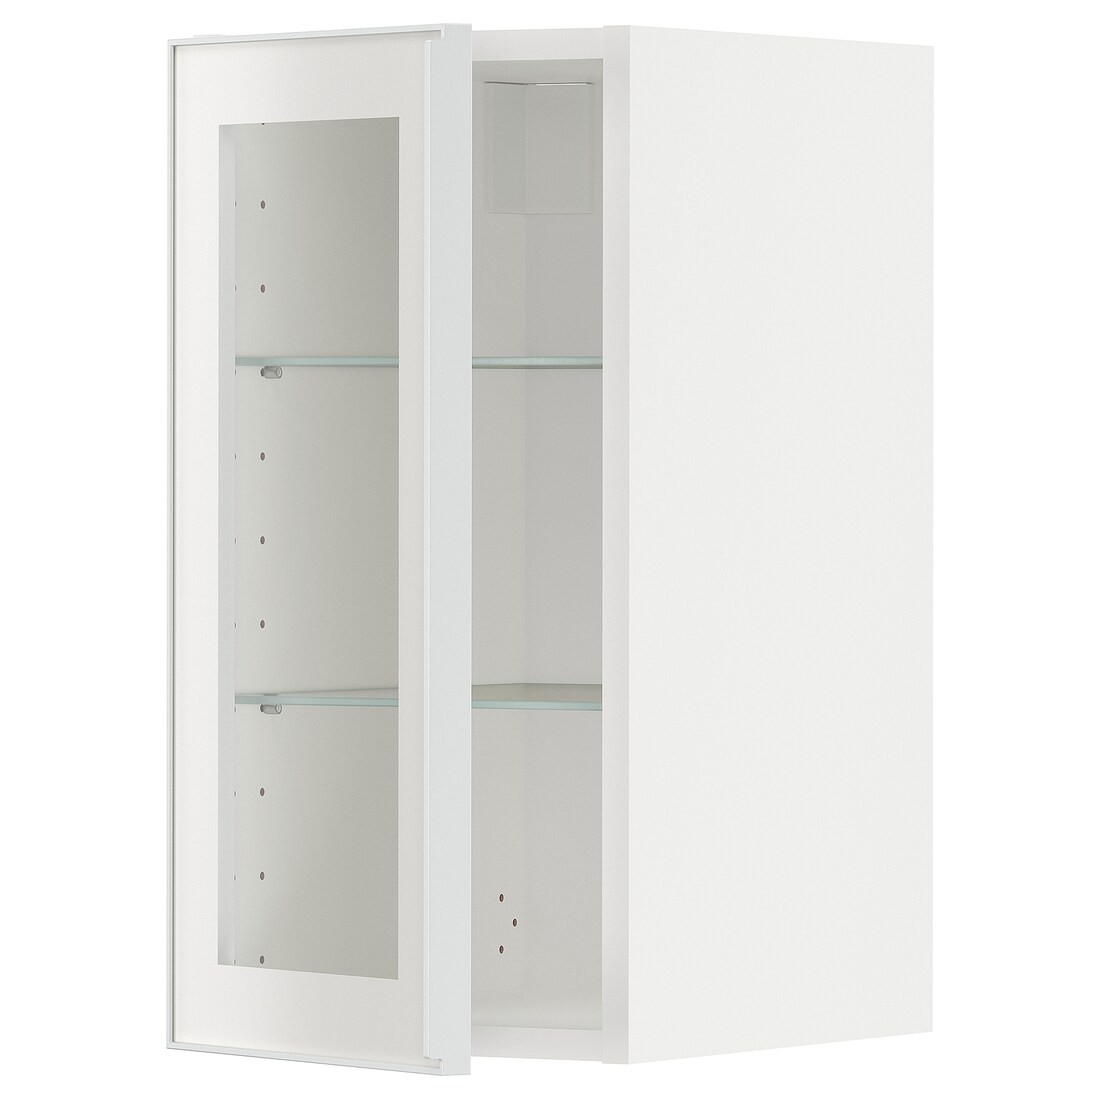 IKEA METOD МЕТОД Навесной шкаф, белый / Hesta белое прозрачное стекло, 30x60 см 09490626 | 094.906.26